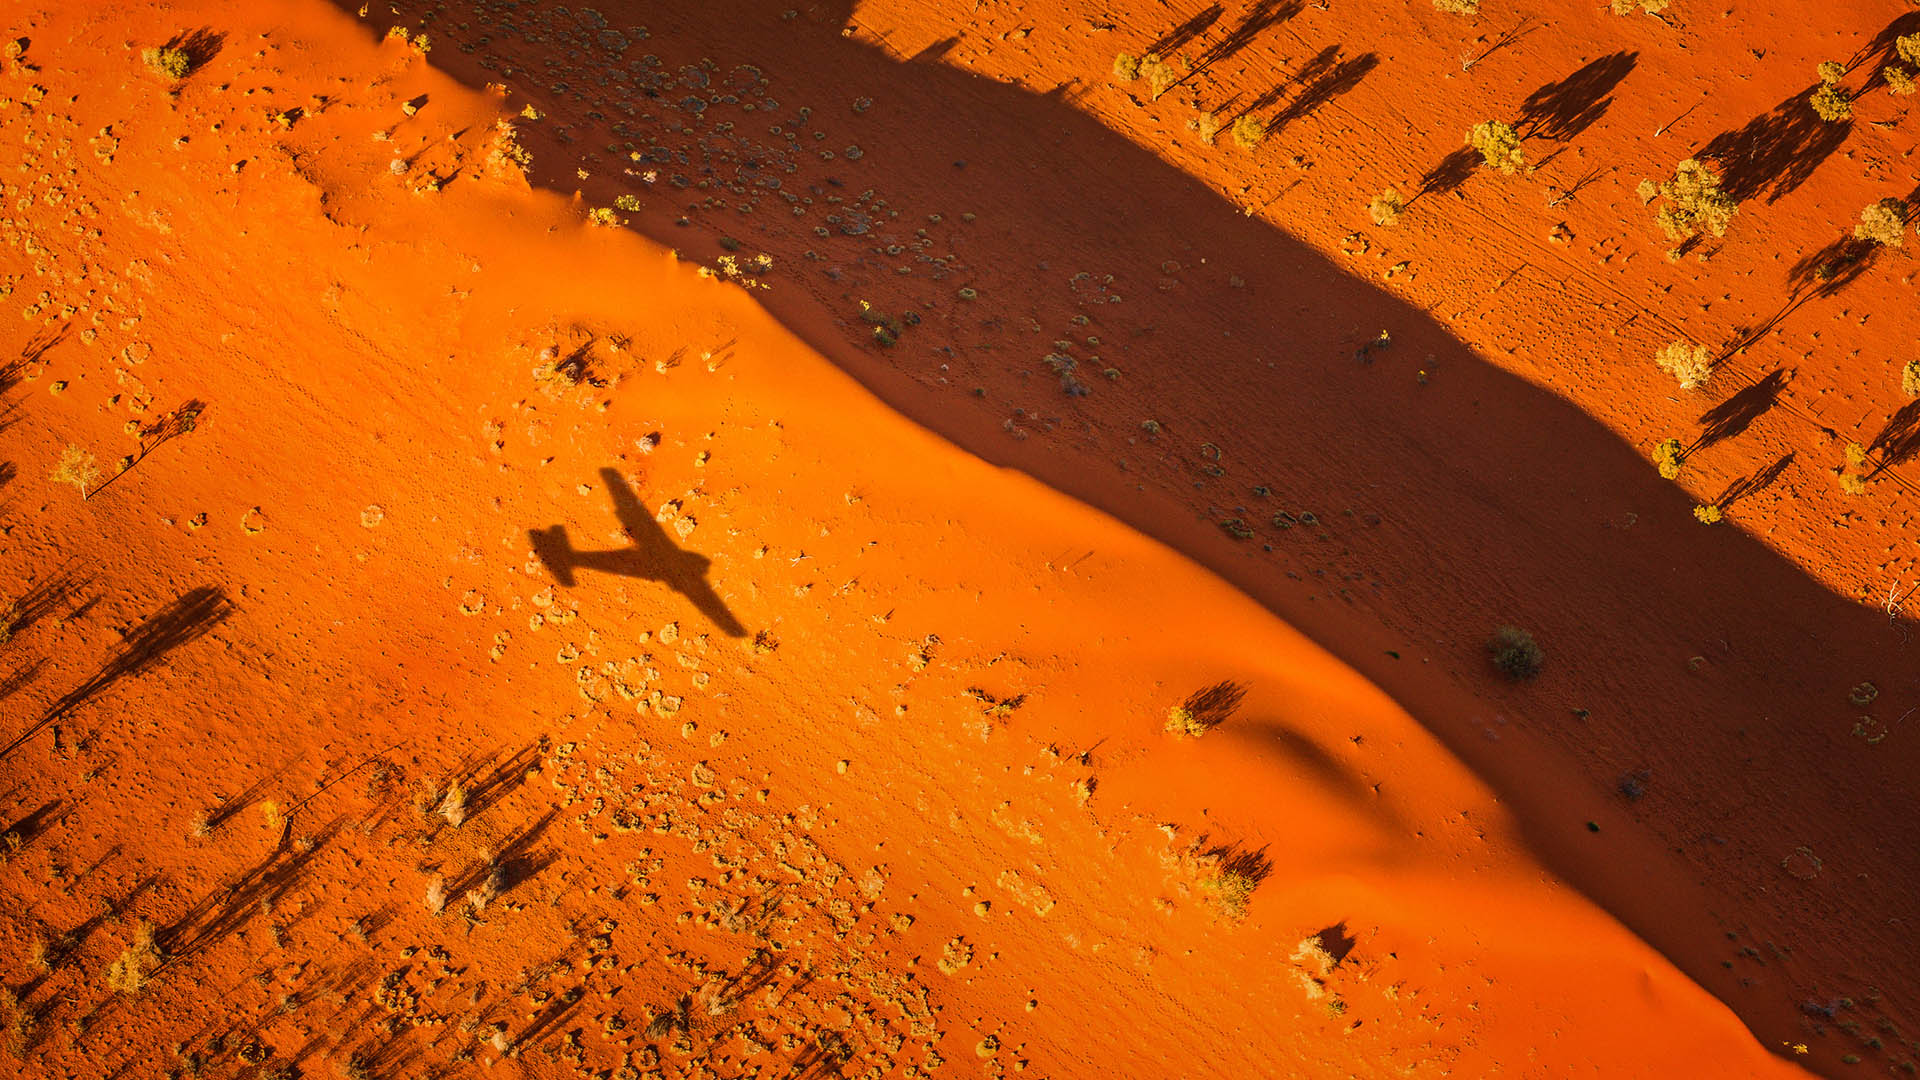 Airplane shadow over desert